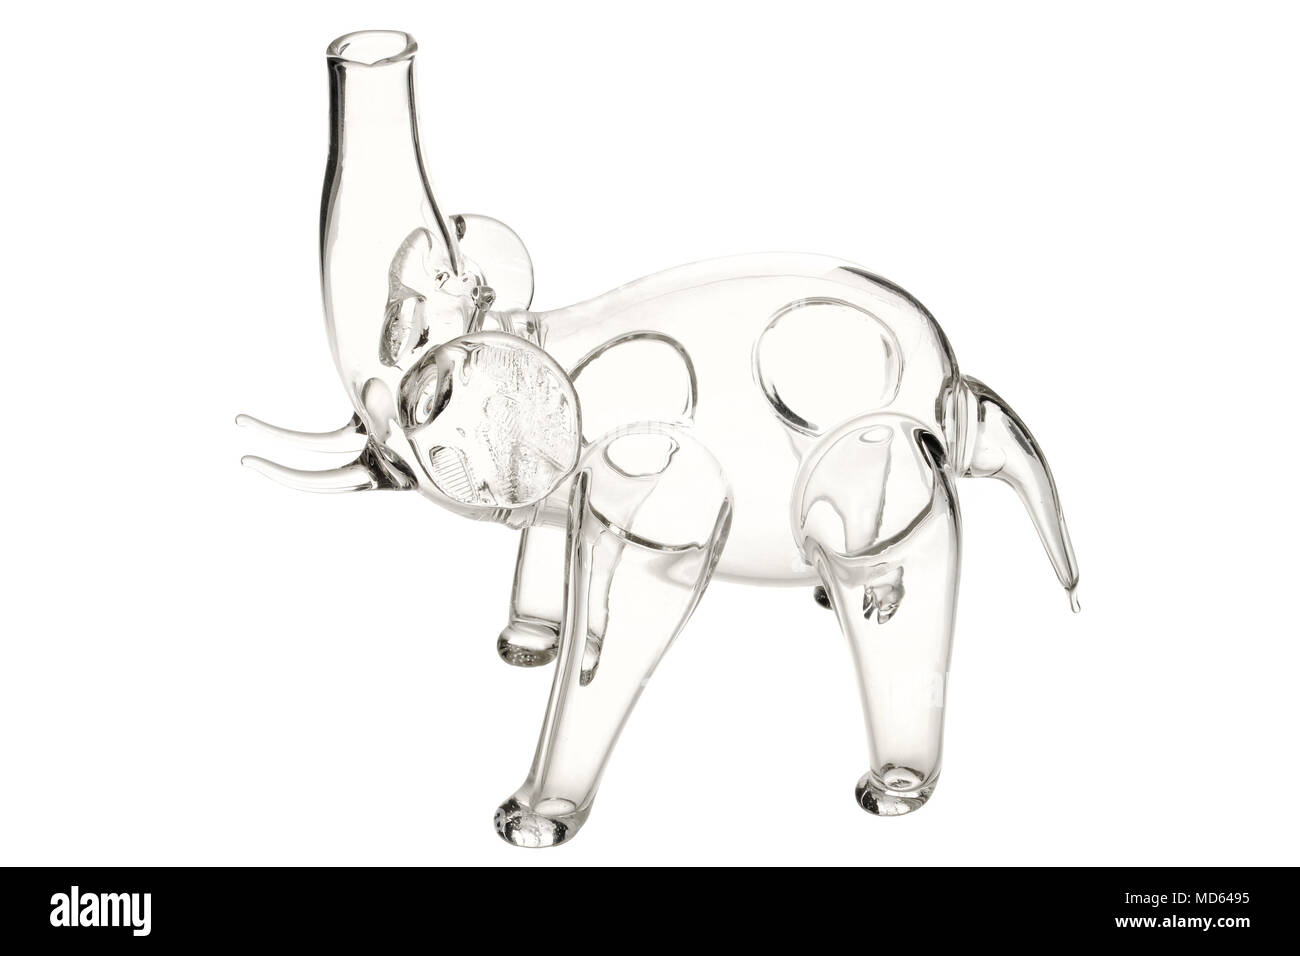 Cute glass elephant figurines isolated on white background Stock Photo